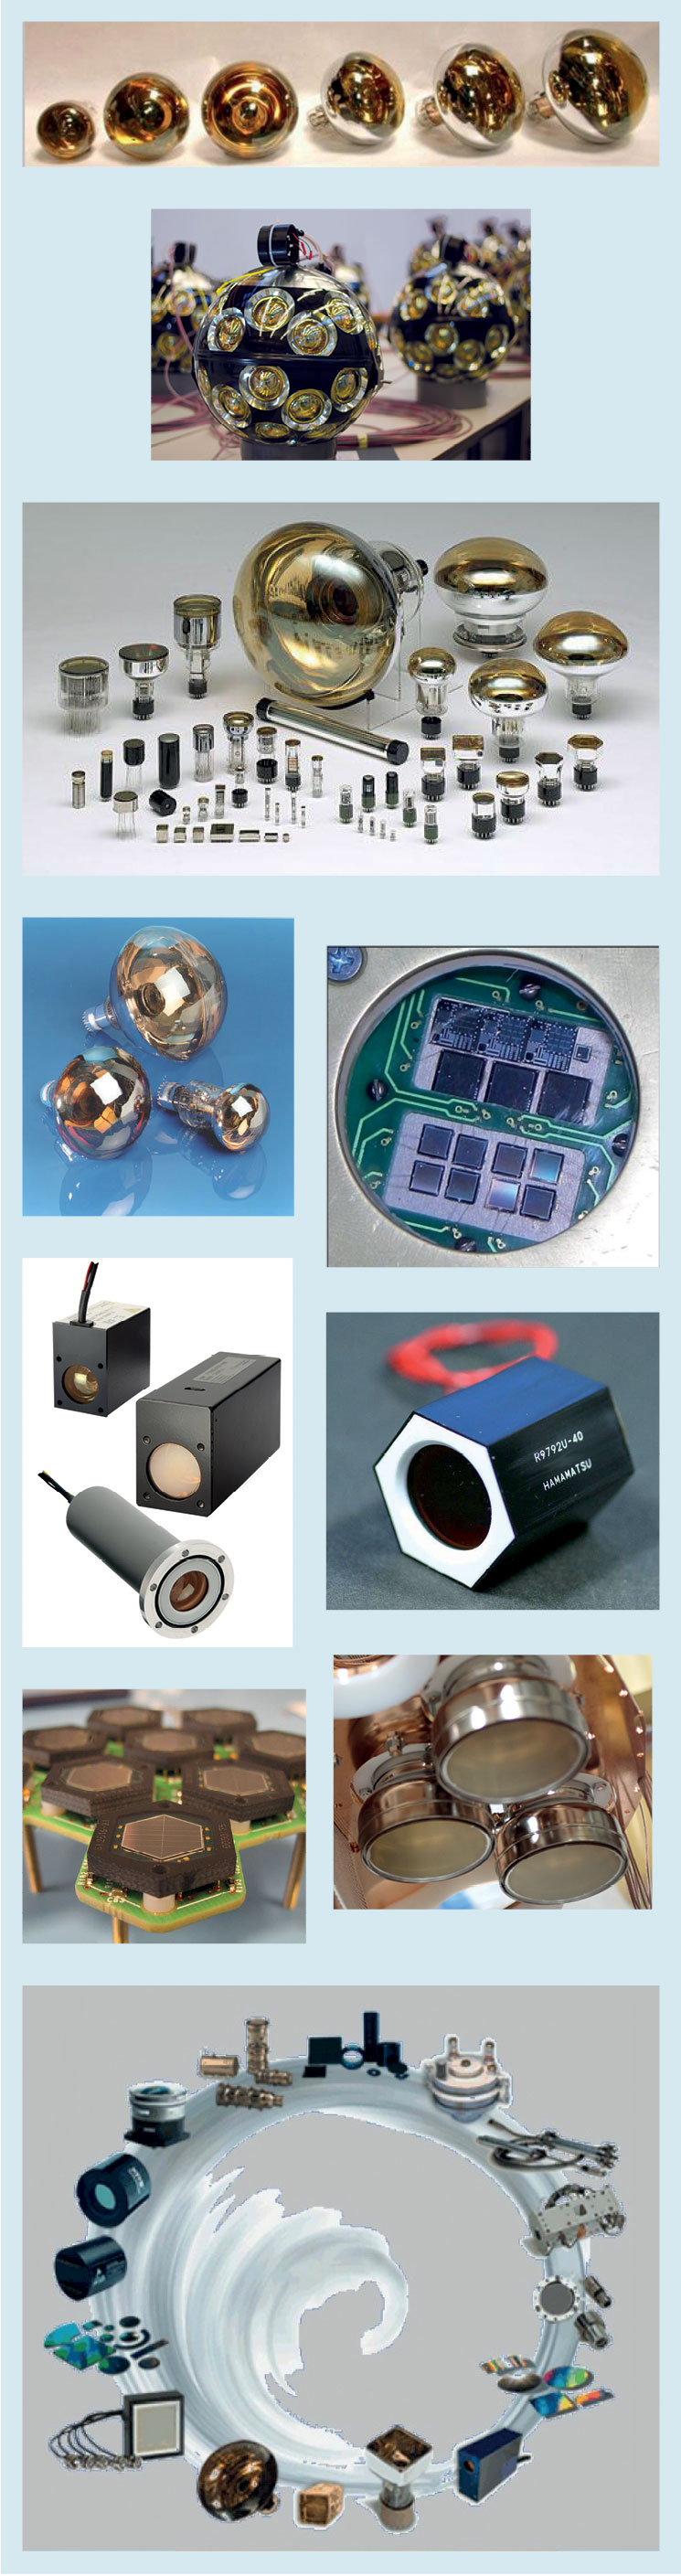 A diversity of low light-level sensors